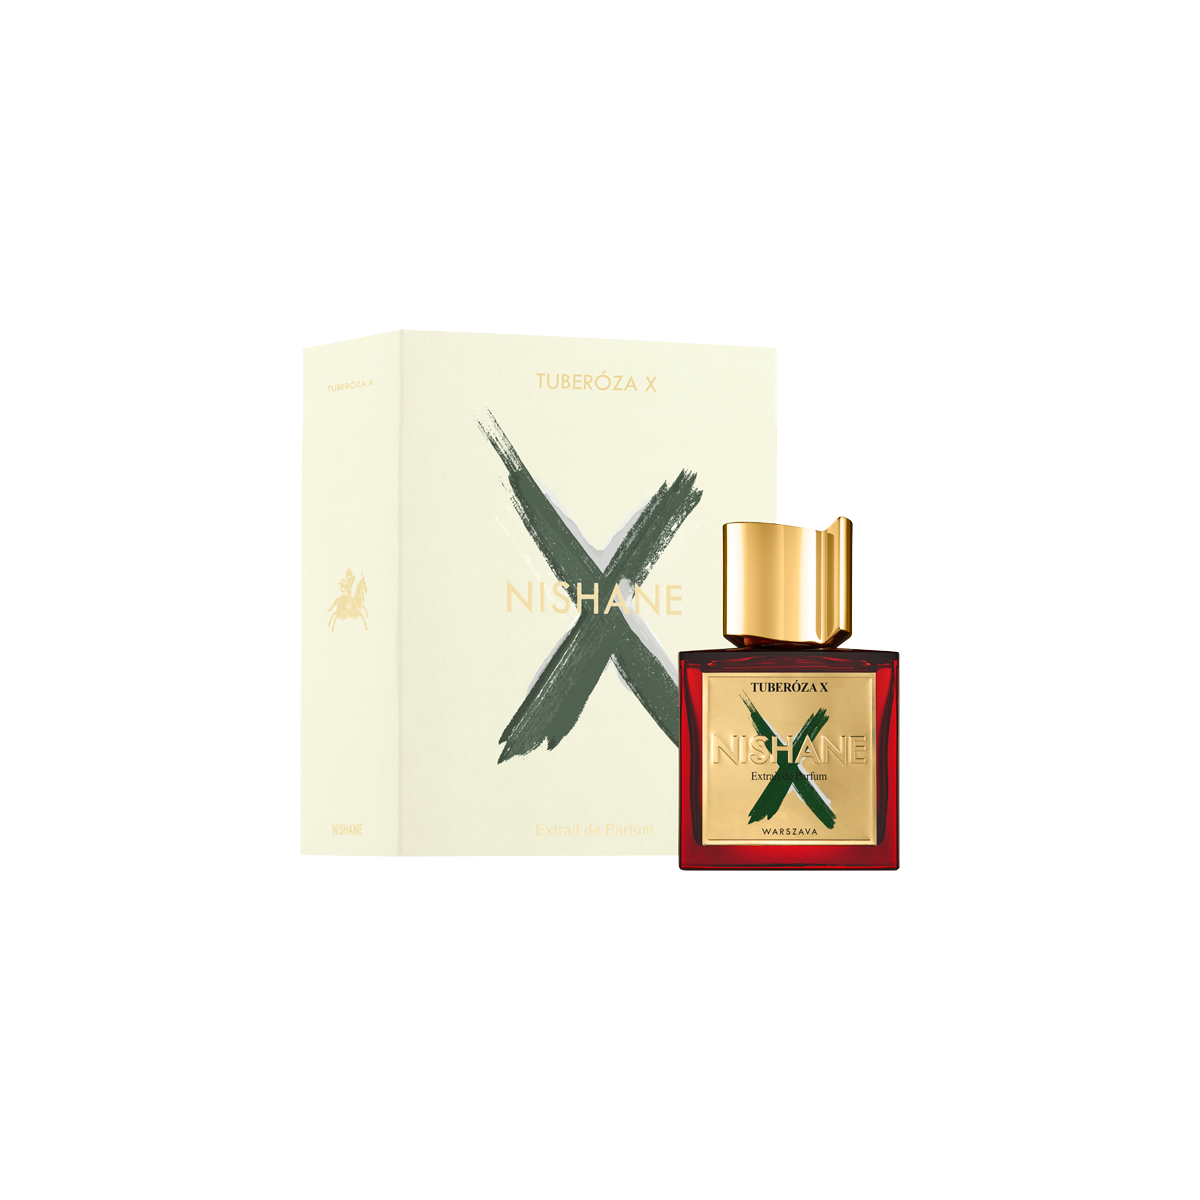 Nishane - Tuberoza Extrait de Parfum